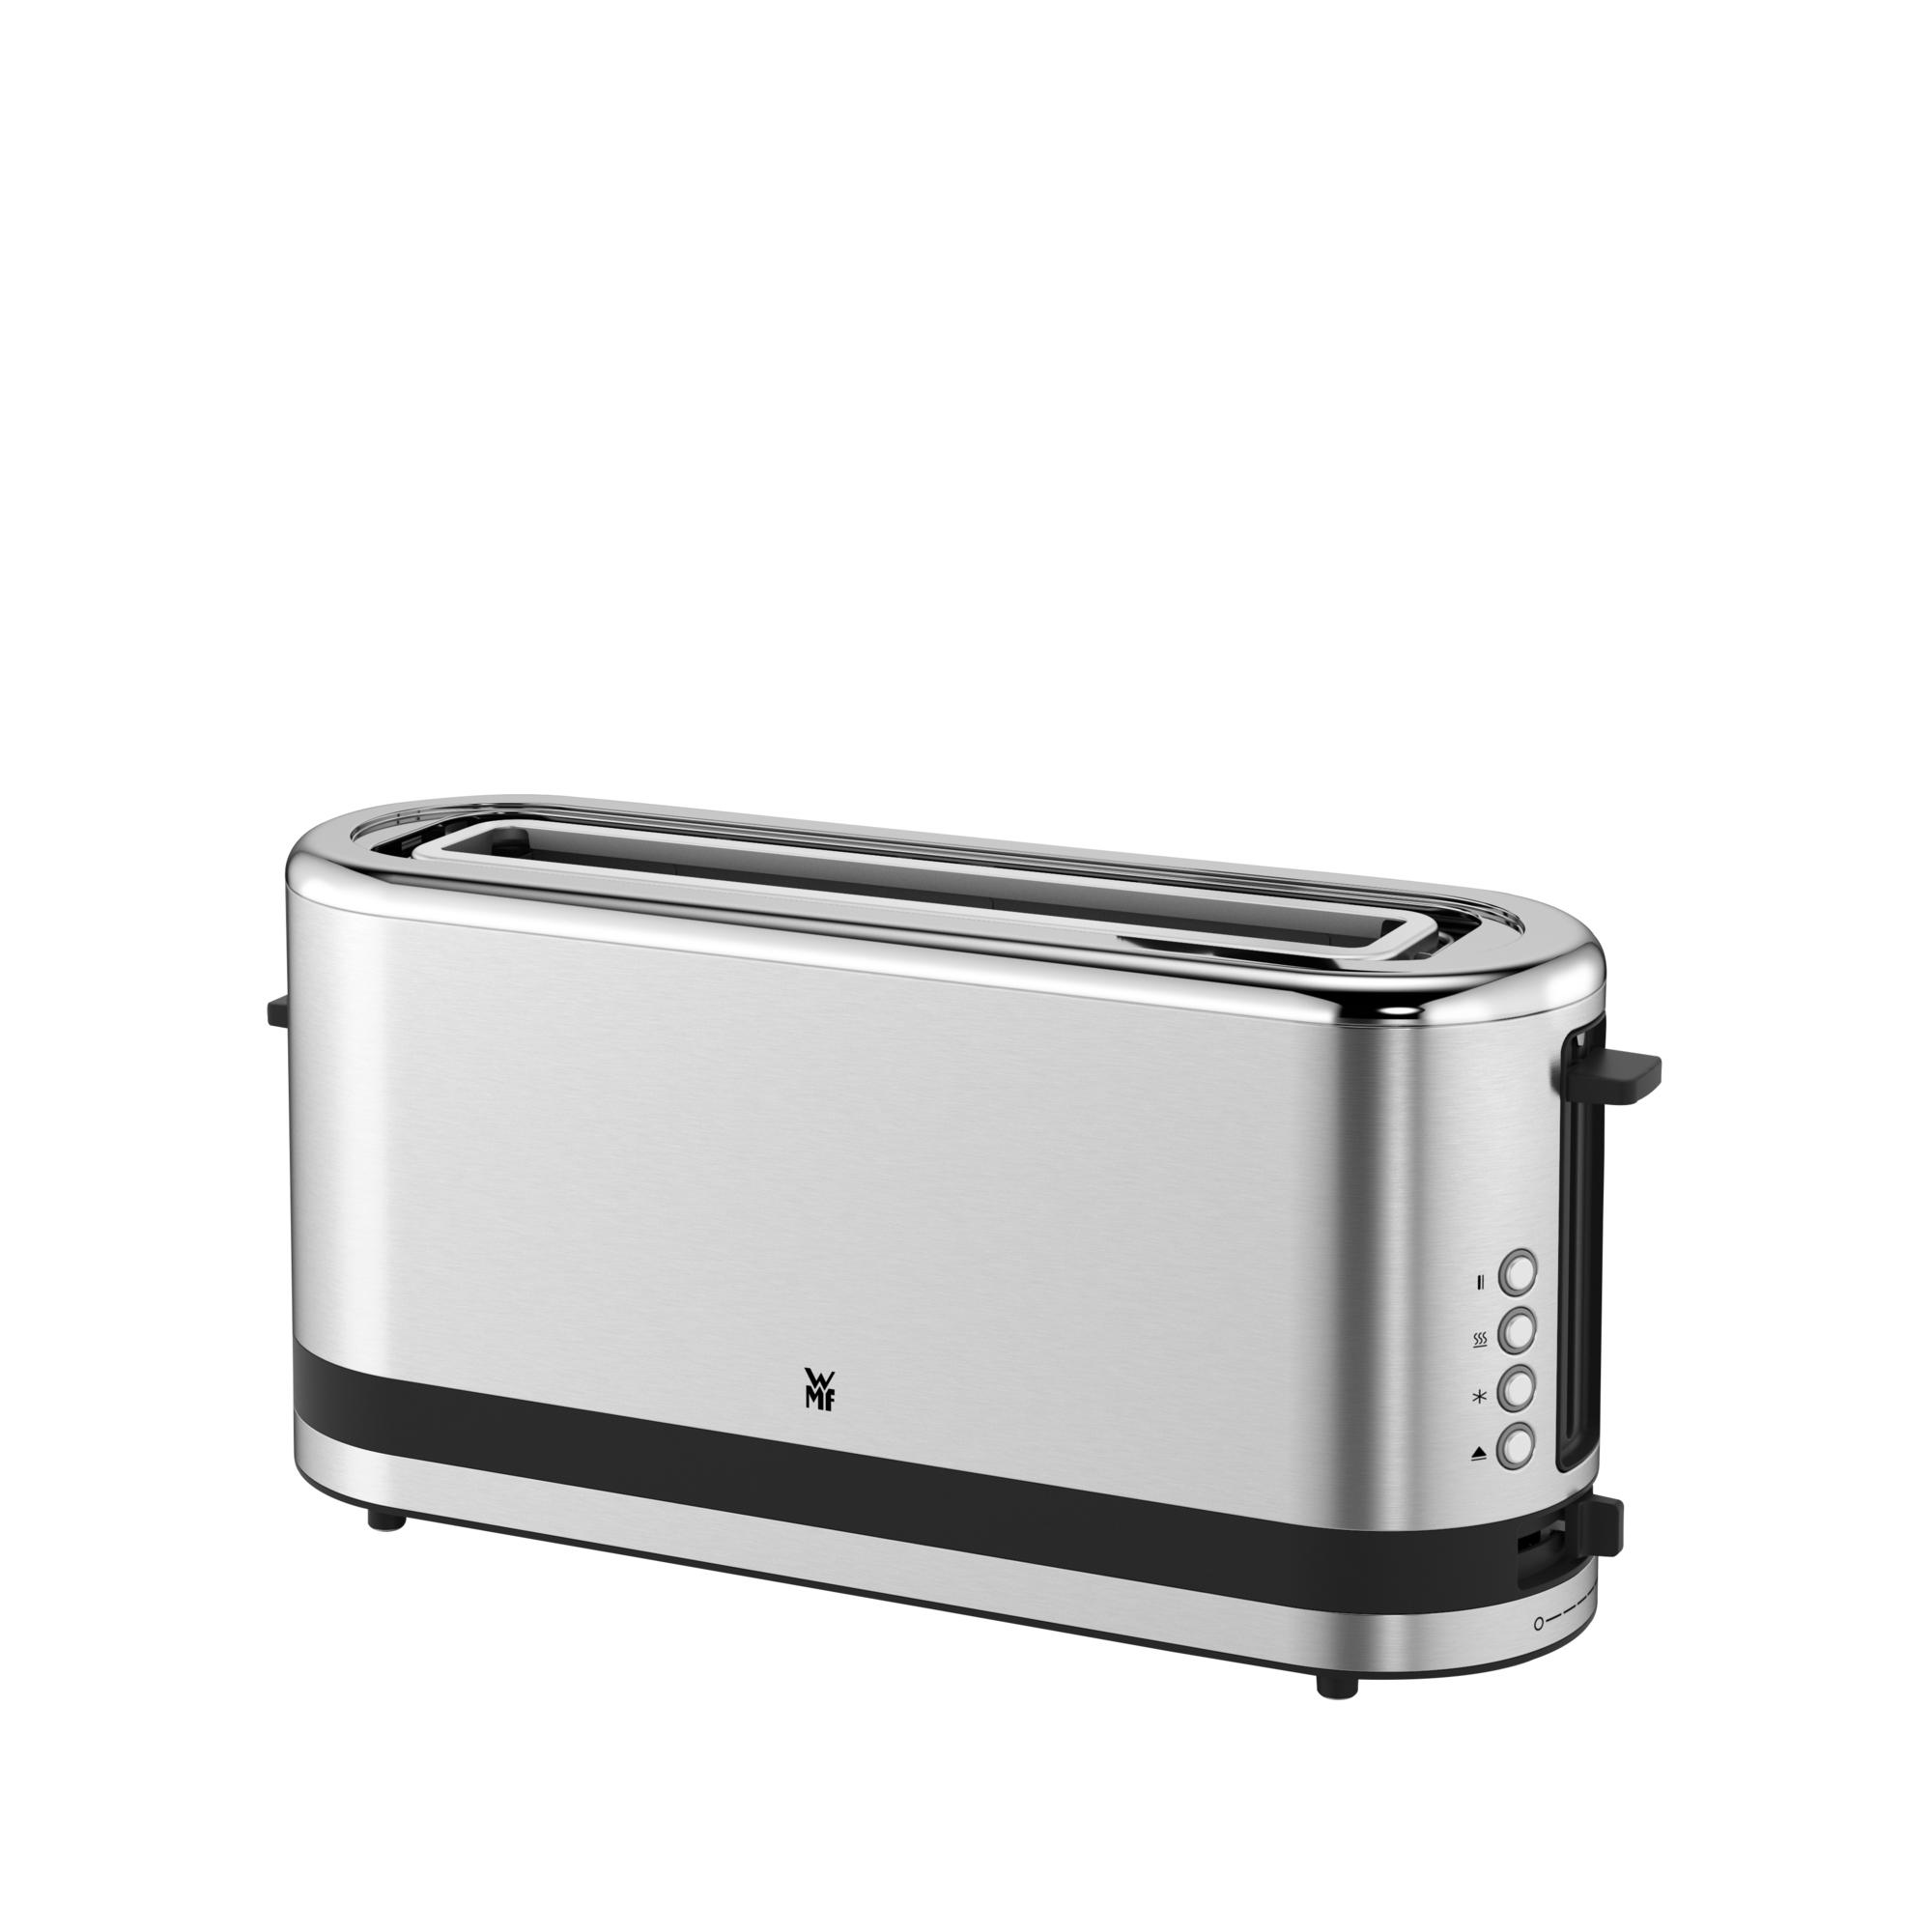 Slimline Toaster  Toaster, Long slot toaster, Home appliances